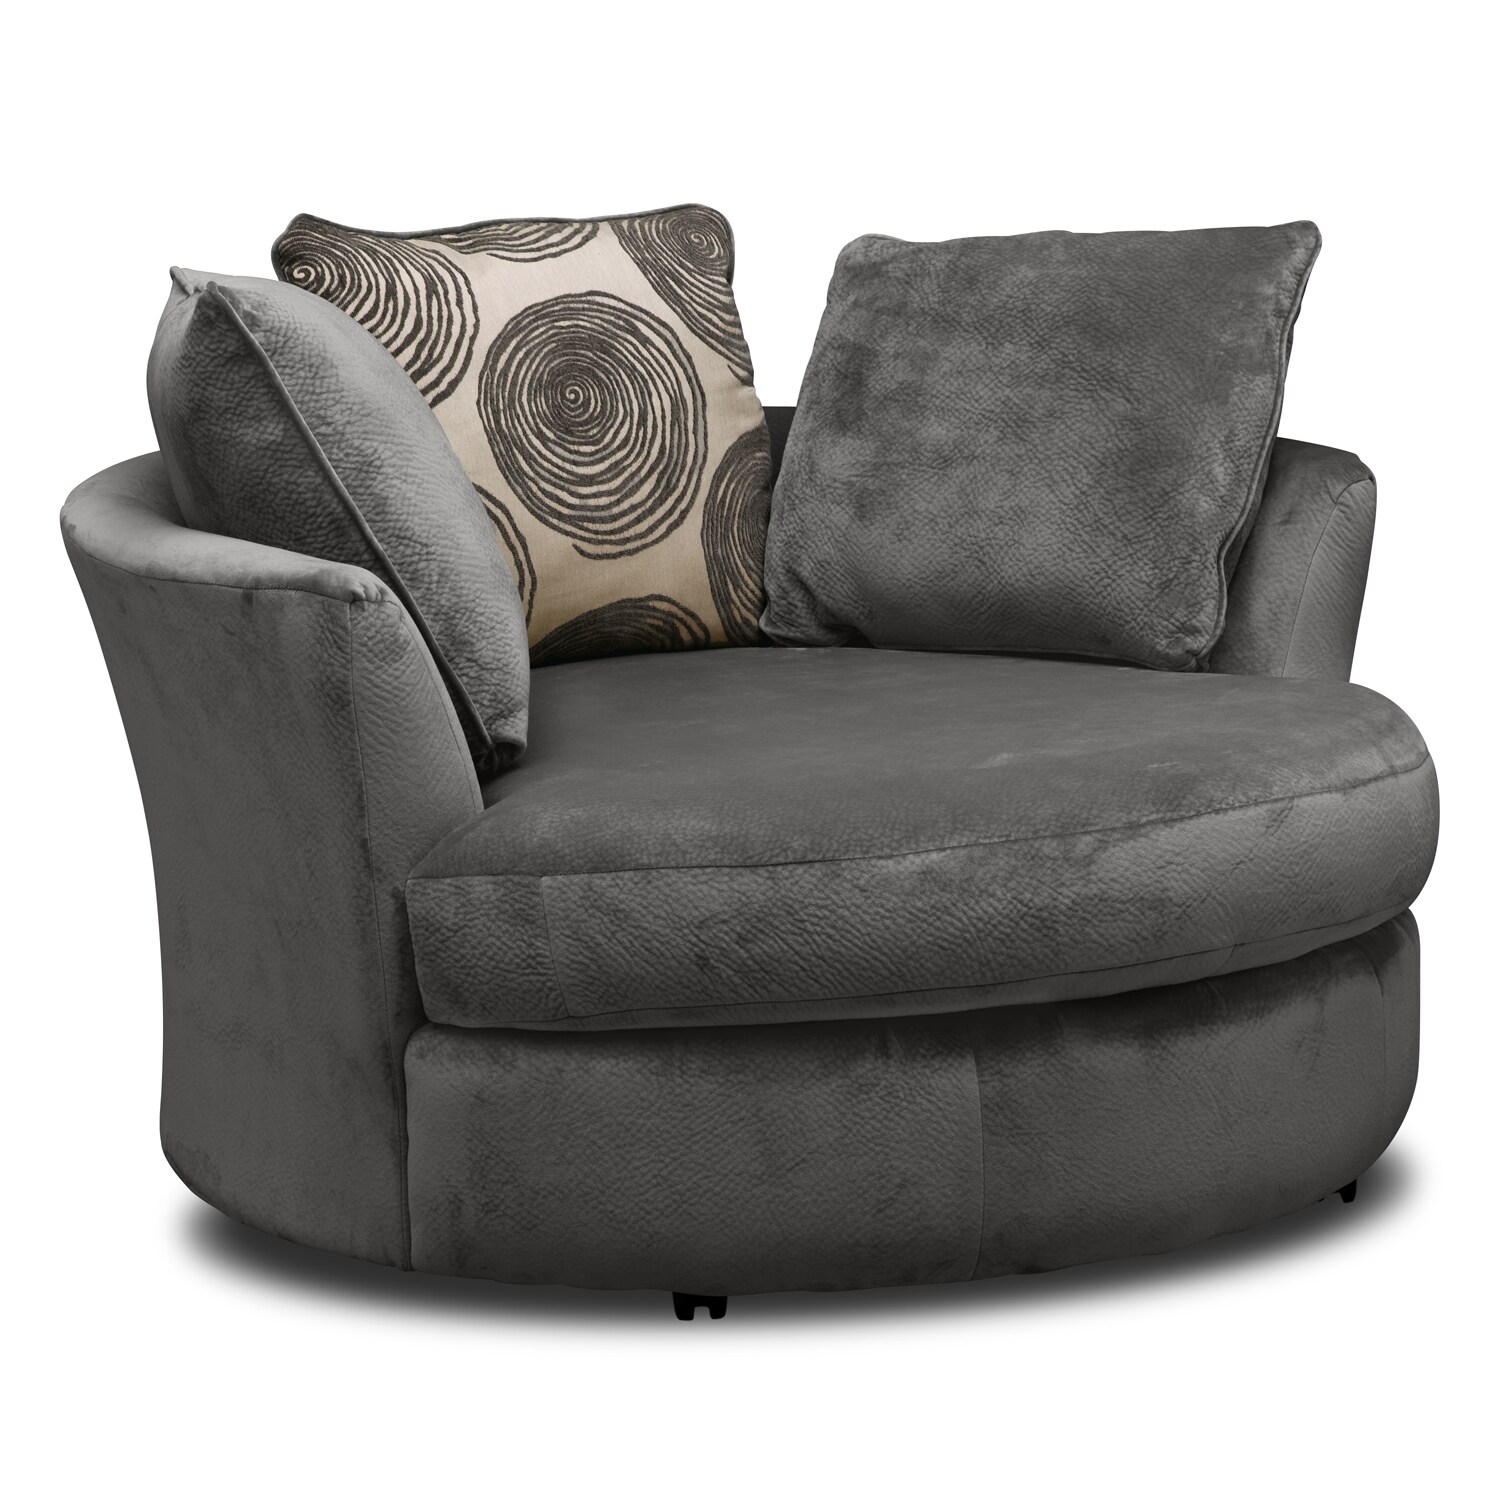 Cordelle Swivel Chair Gray Value City Furniture